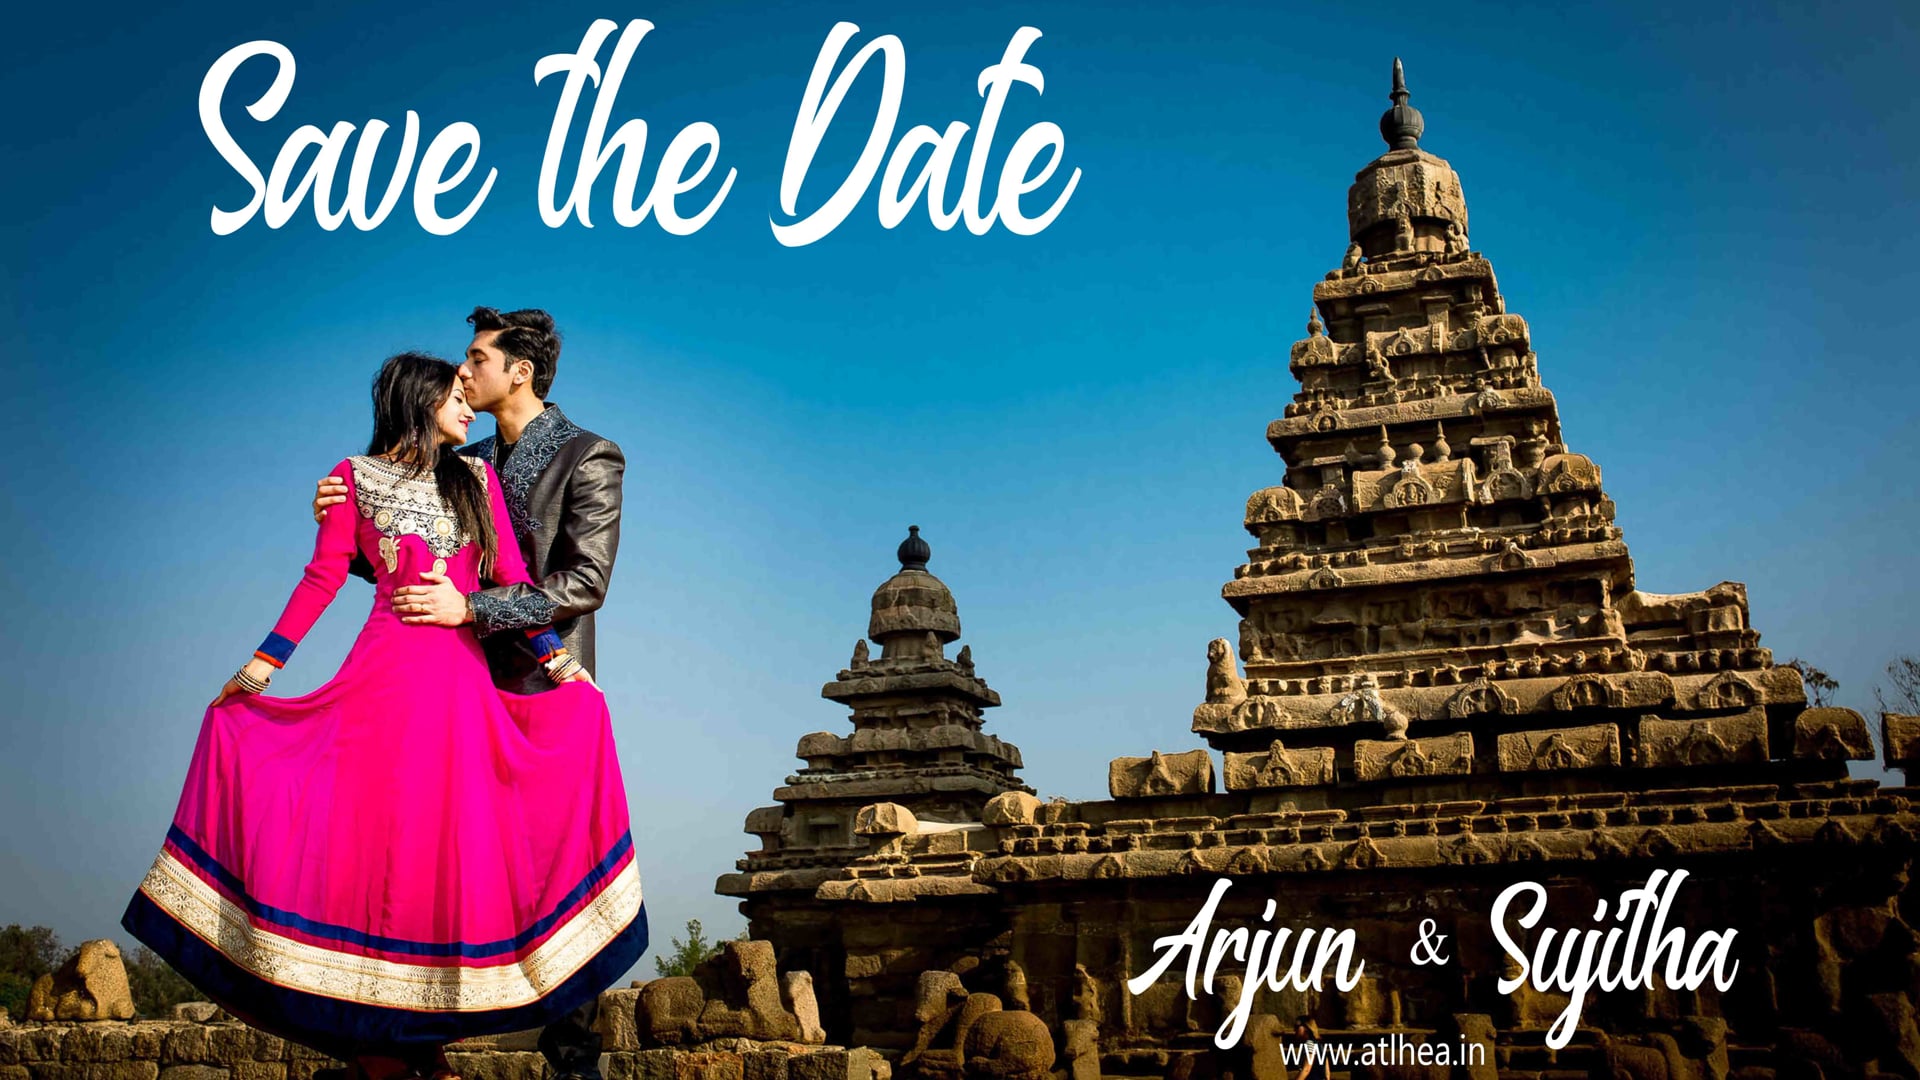 Arjun & Sujitha Save the Date